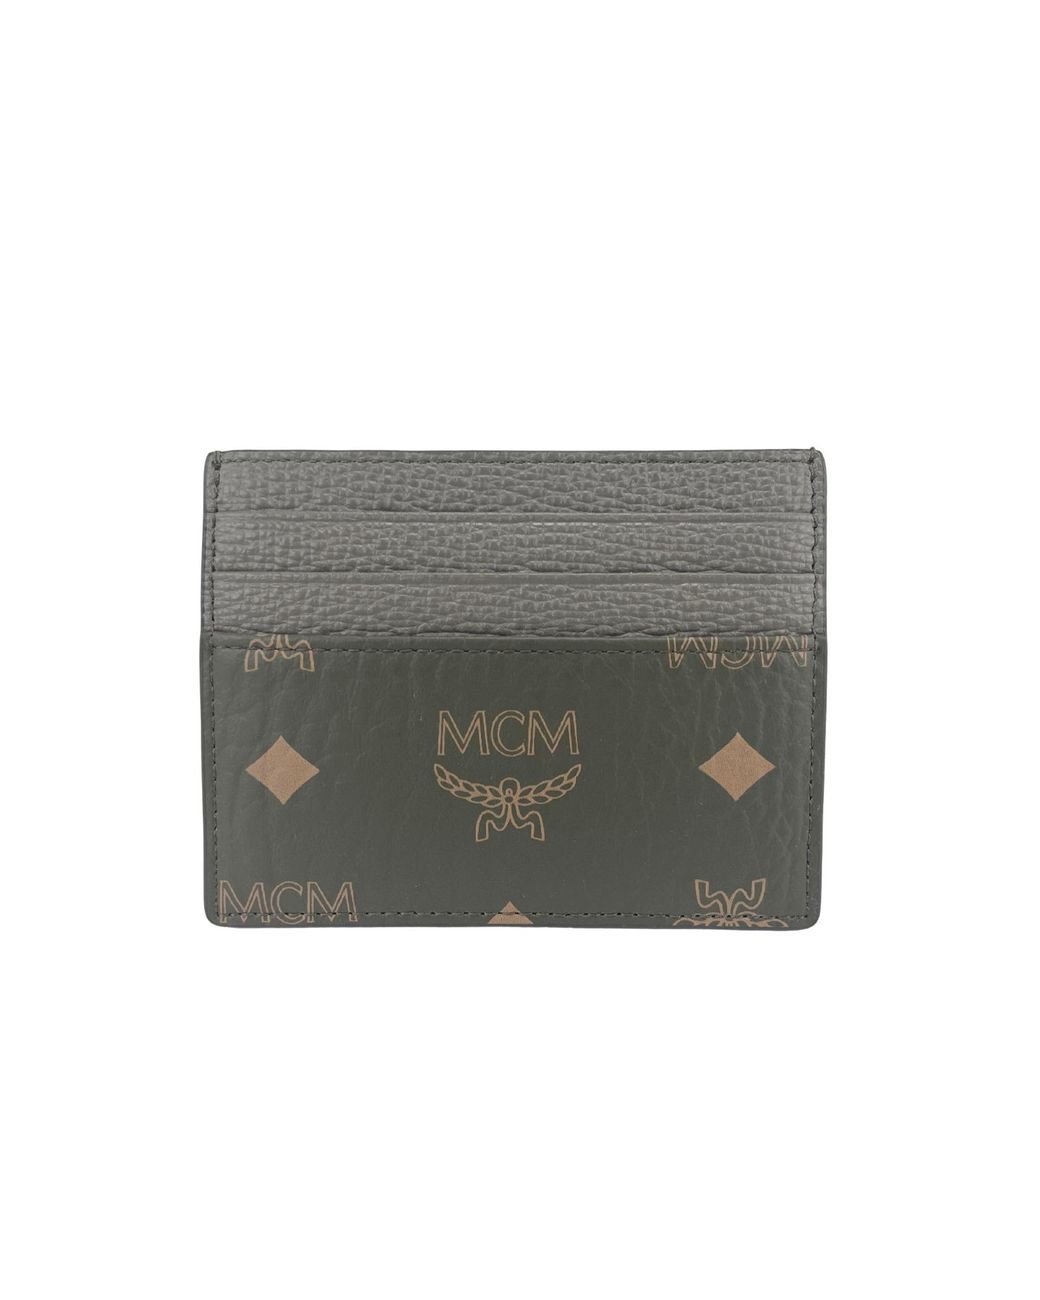 Louis Vuitton Card Holder Money Clip Saks Fifth Avenue VERY